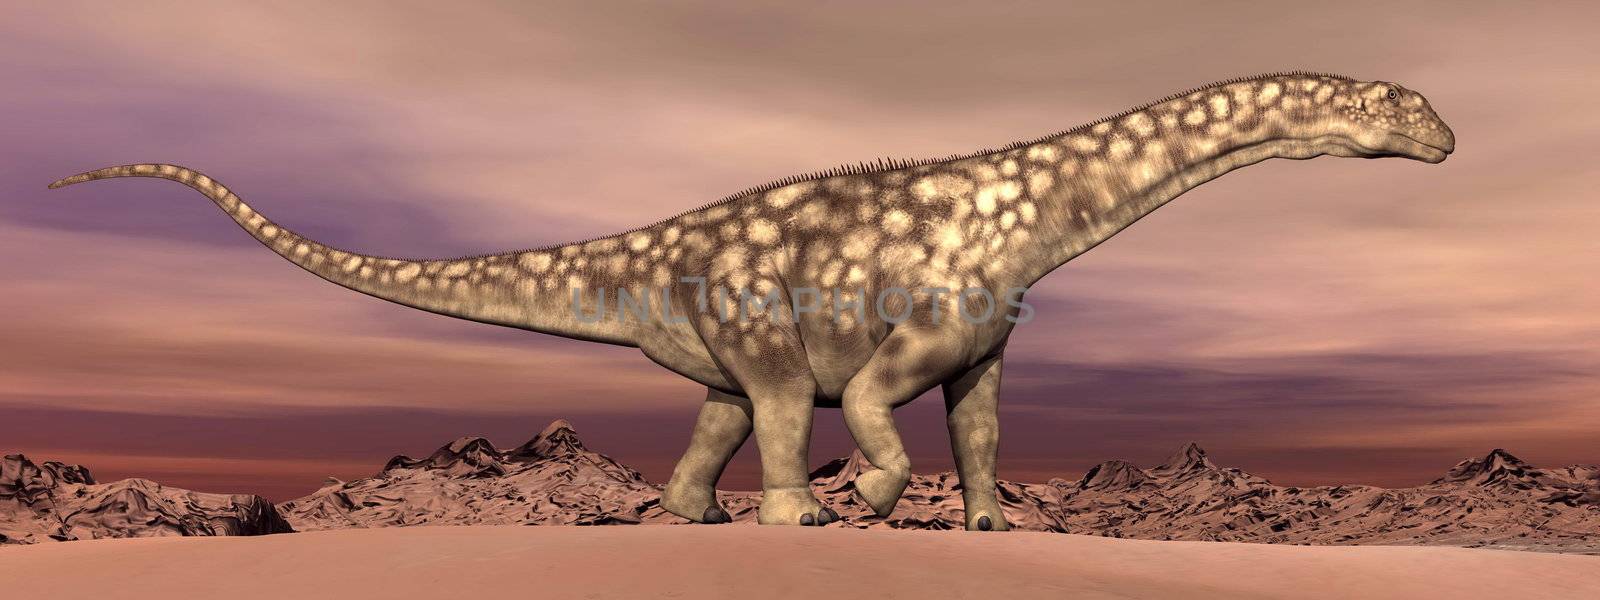 Big argentinosaurus dinosaur walking quietly in the desert by dawn